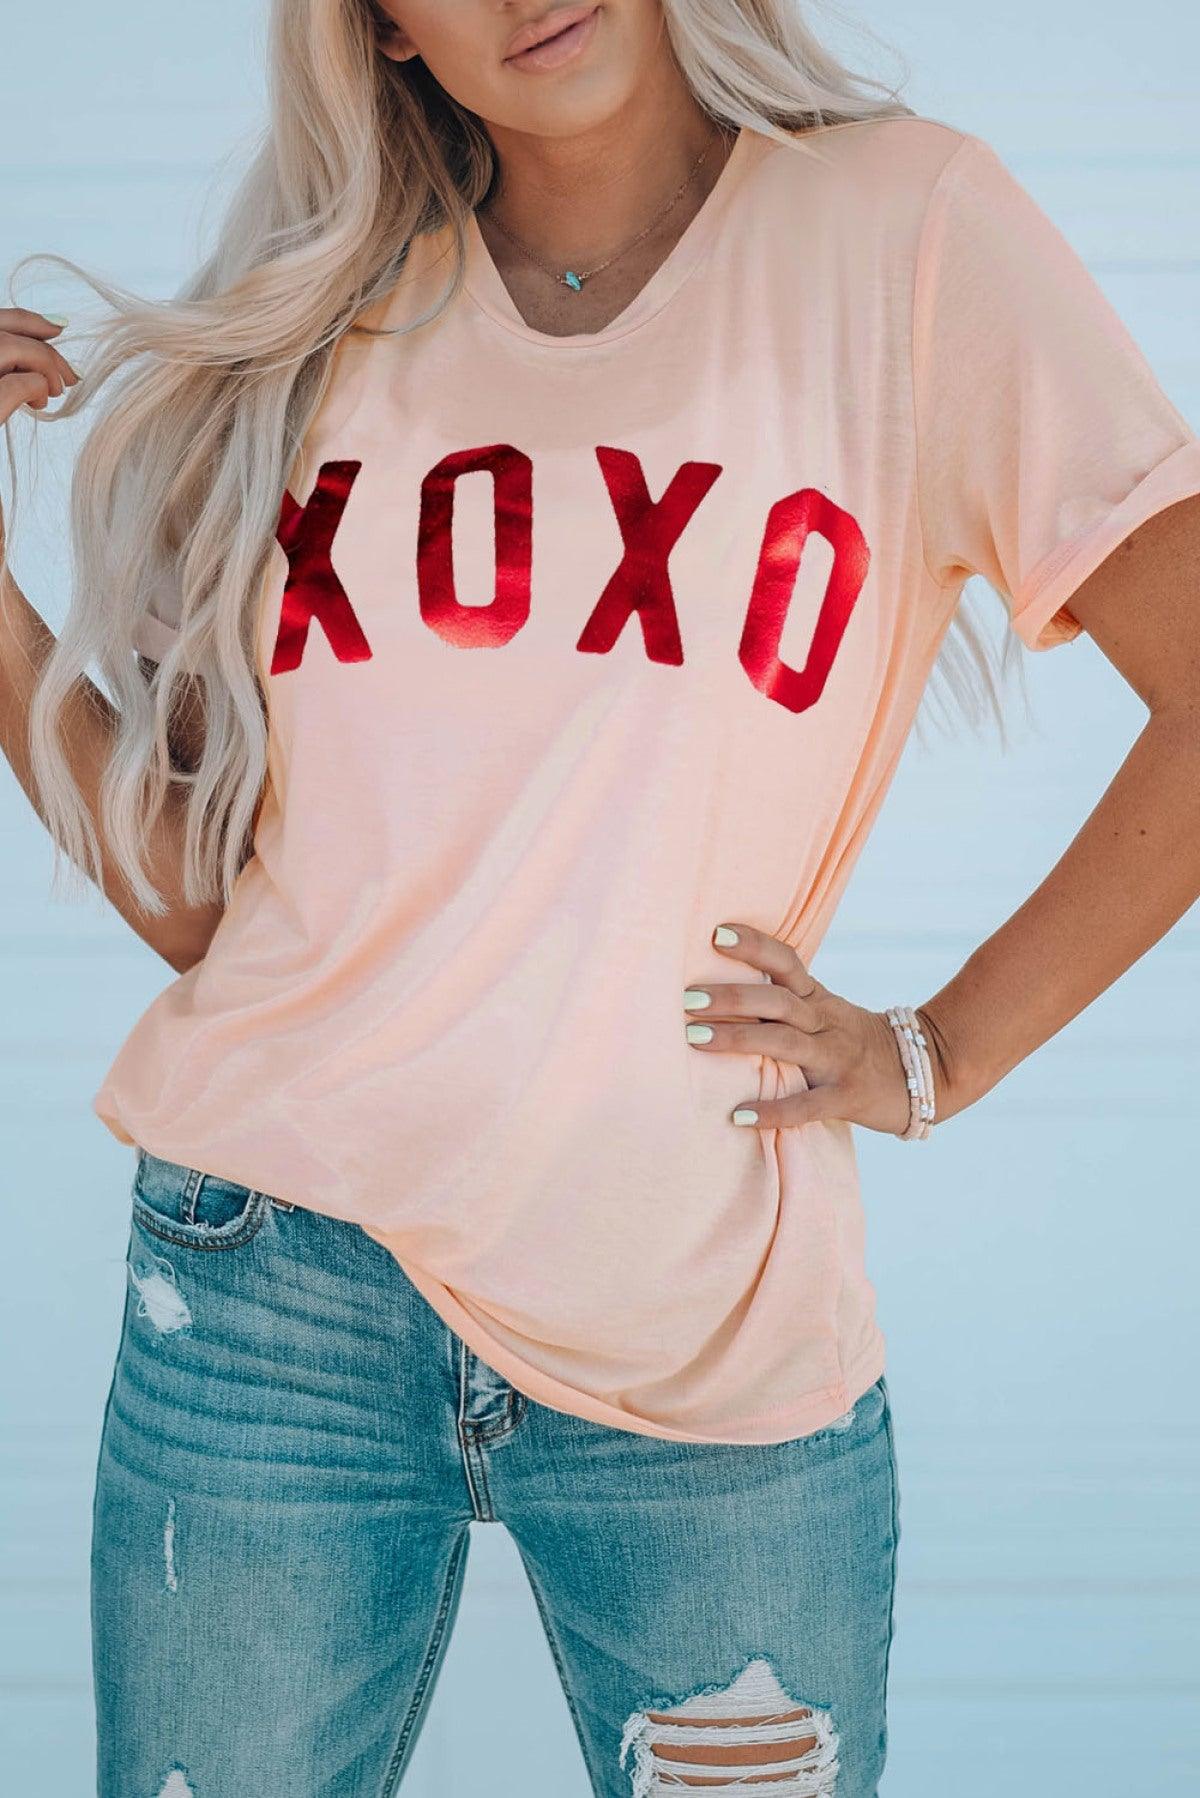 Pink XOXO T-Shirt Glitter Pattern Print Short Sleeve Graphic Tee